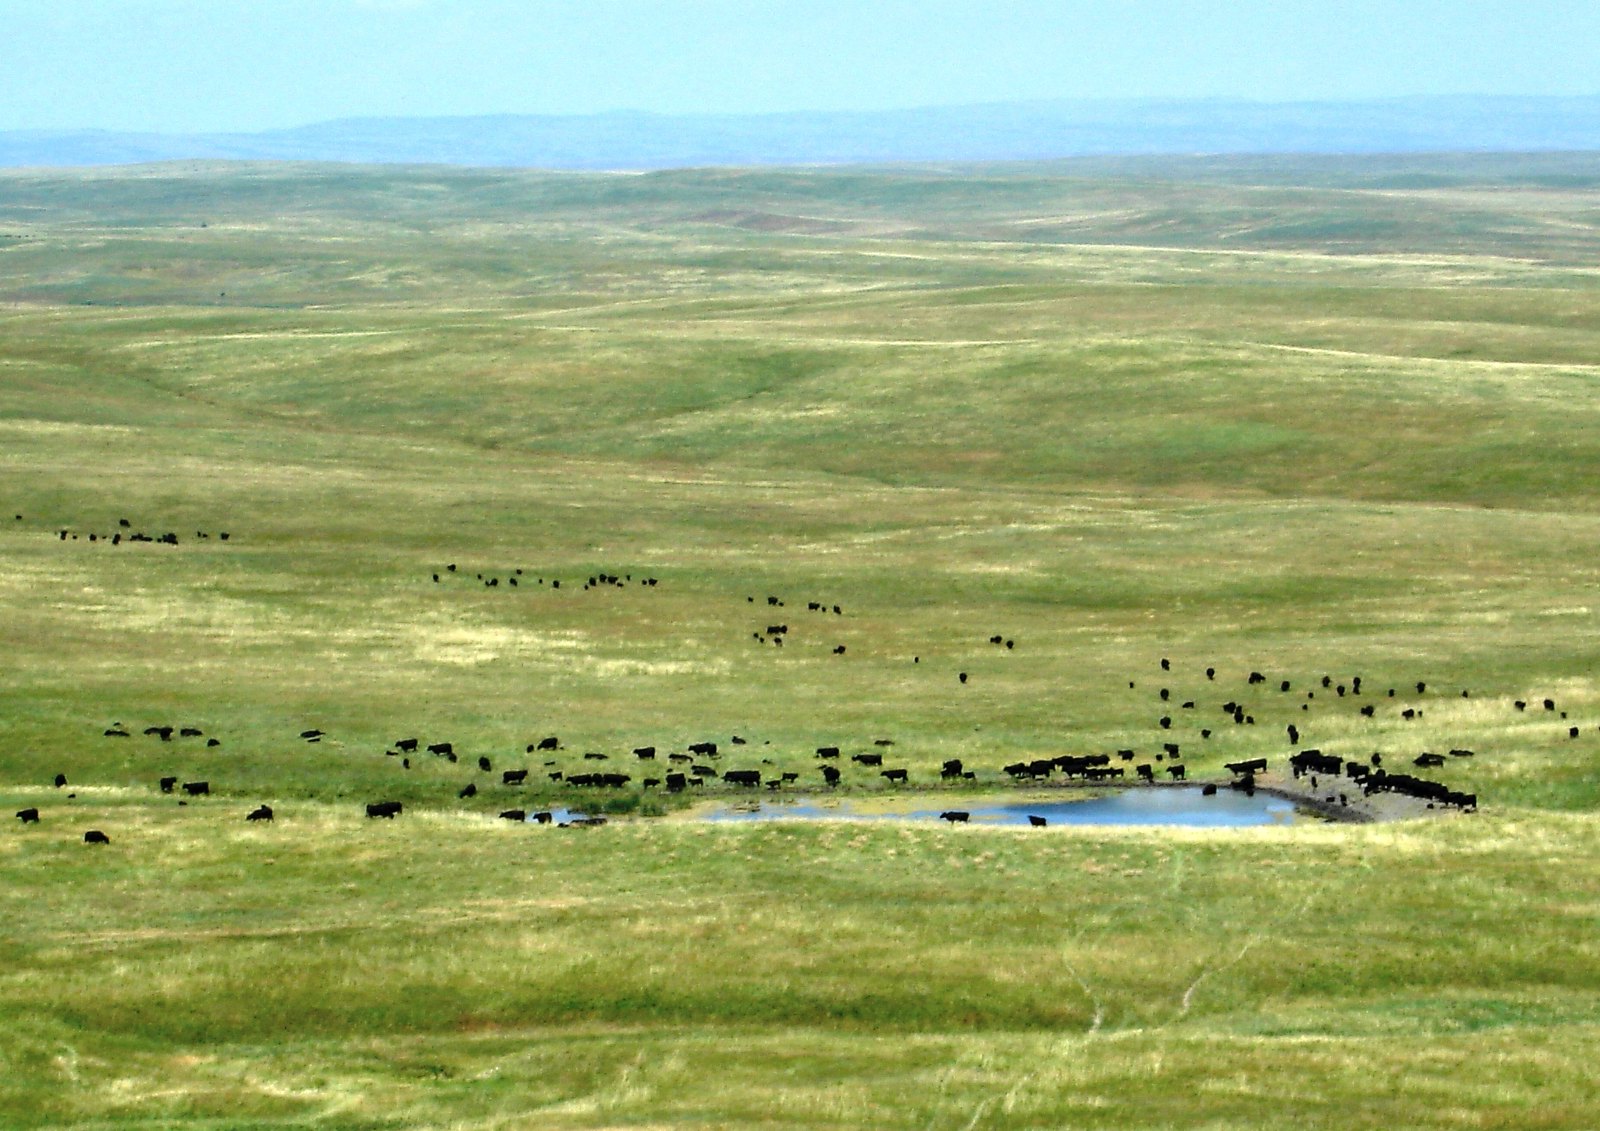 A herd of cattle gather around a stock pond on a vast, lush grassland. Courtesy: USDA [CC BY 2.0]